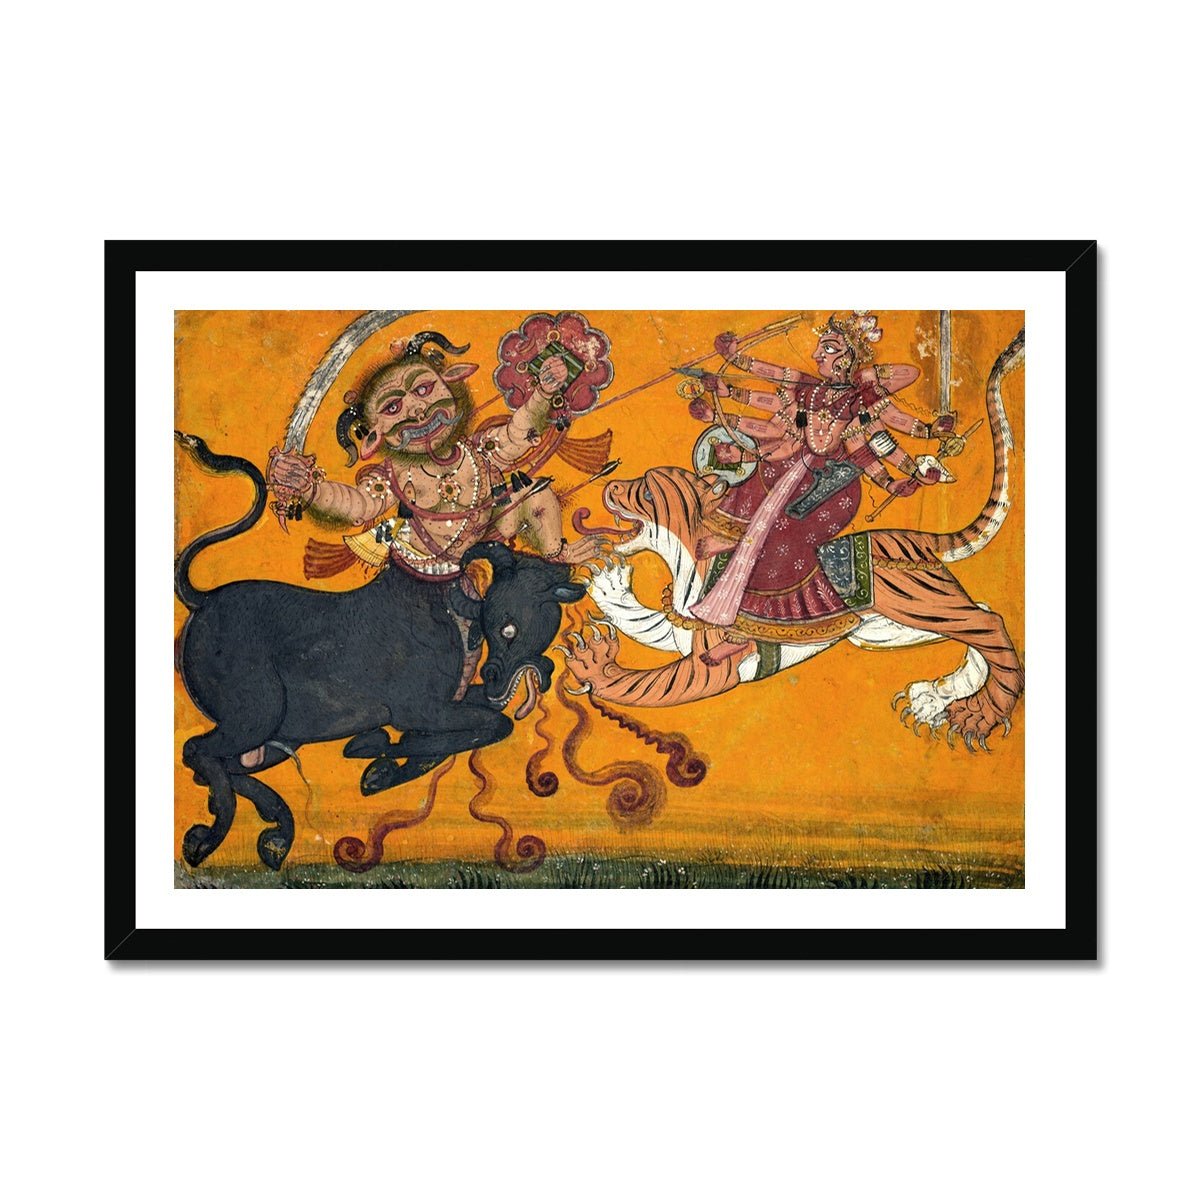 Fine art A4 Landscape / Black Frame Durga Slaying Mahisha: Feminine Strength &amp; Empowerment Deity | Powerful Woman Protector Goddess Framed Art Print